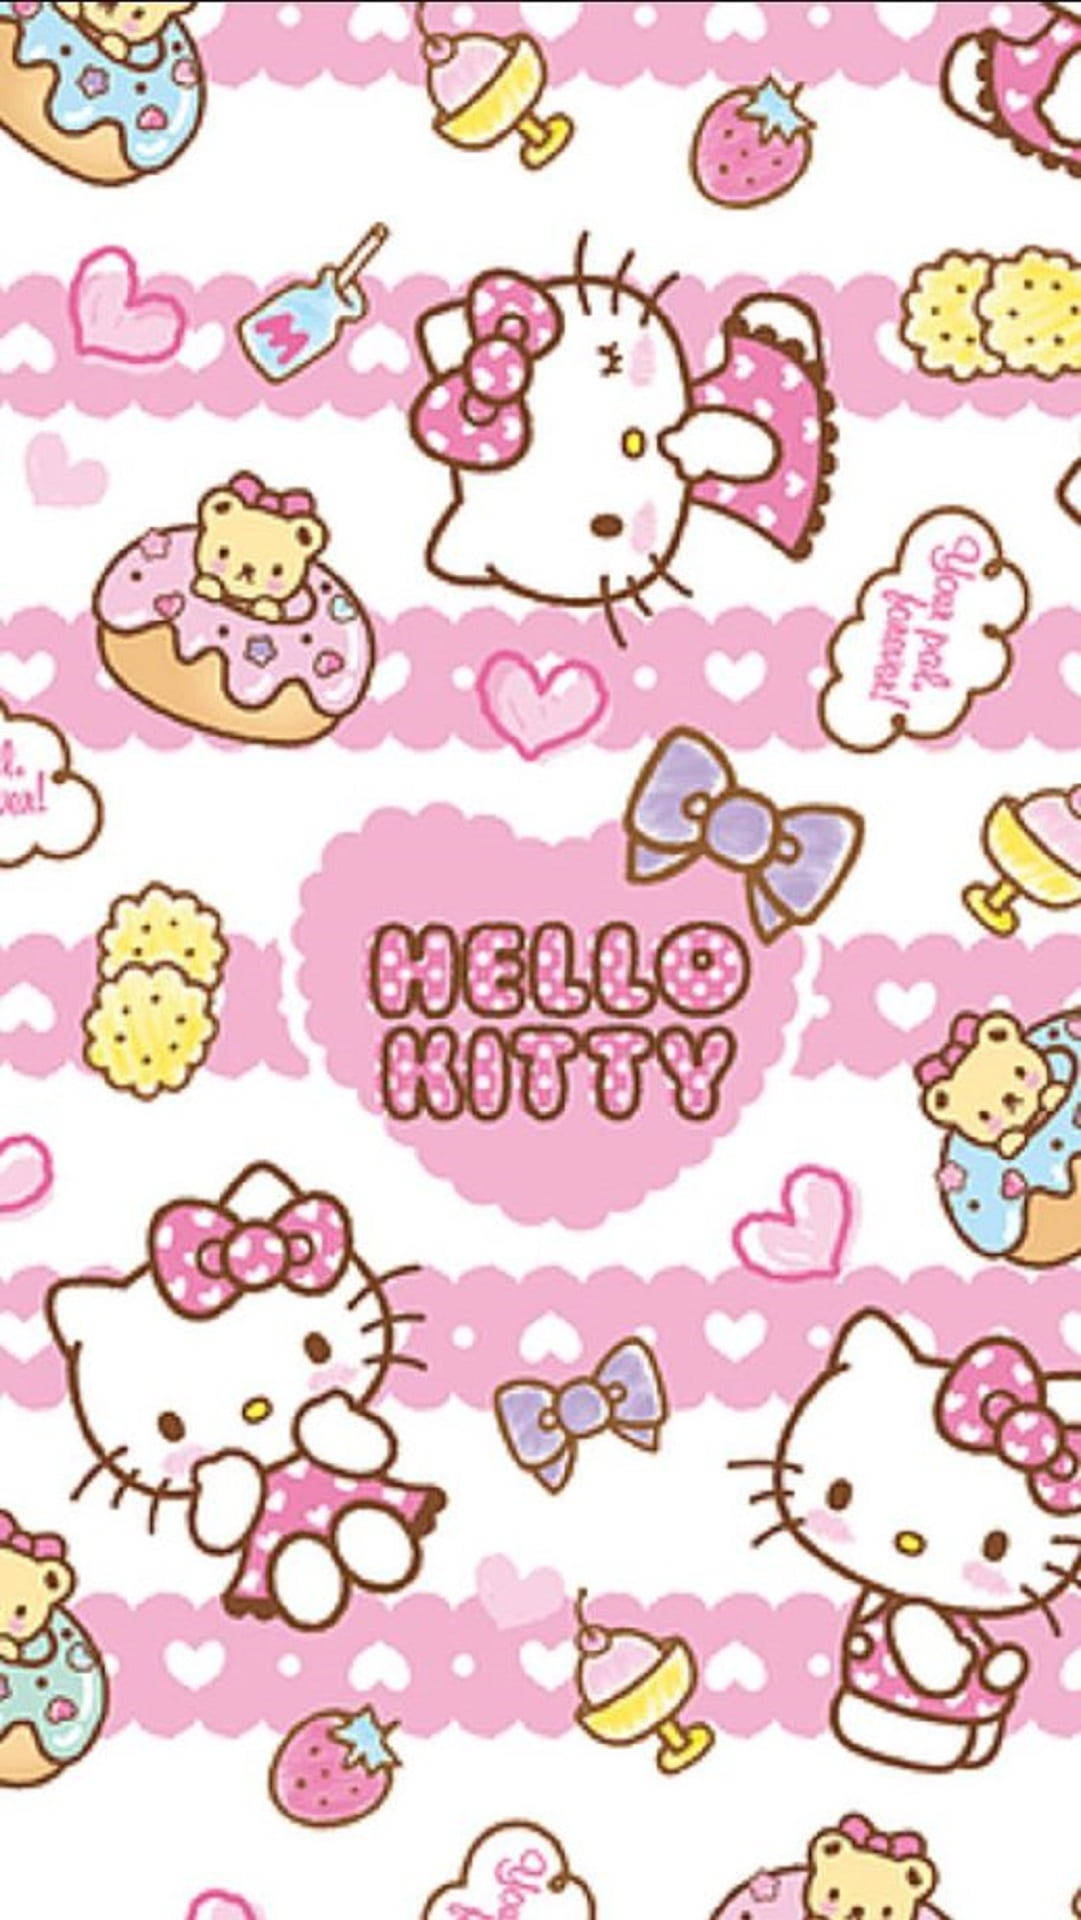 Wallpaper I made ENJOY  Pink wallpaper hello kitty, Hello kitty